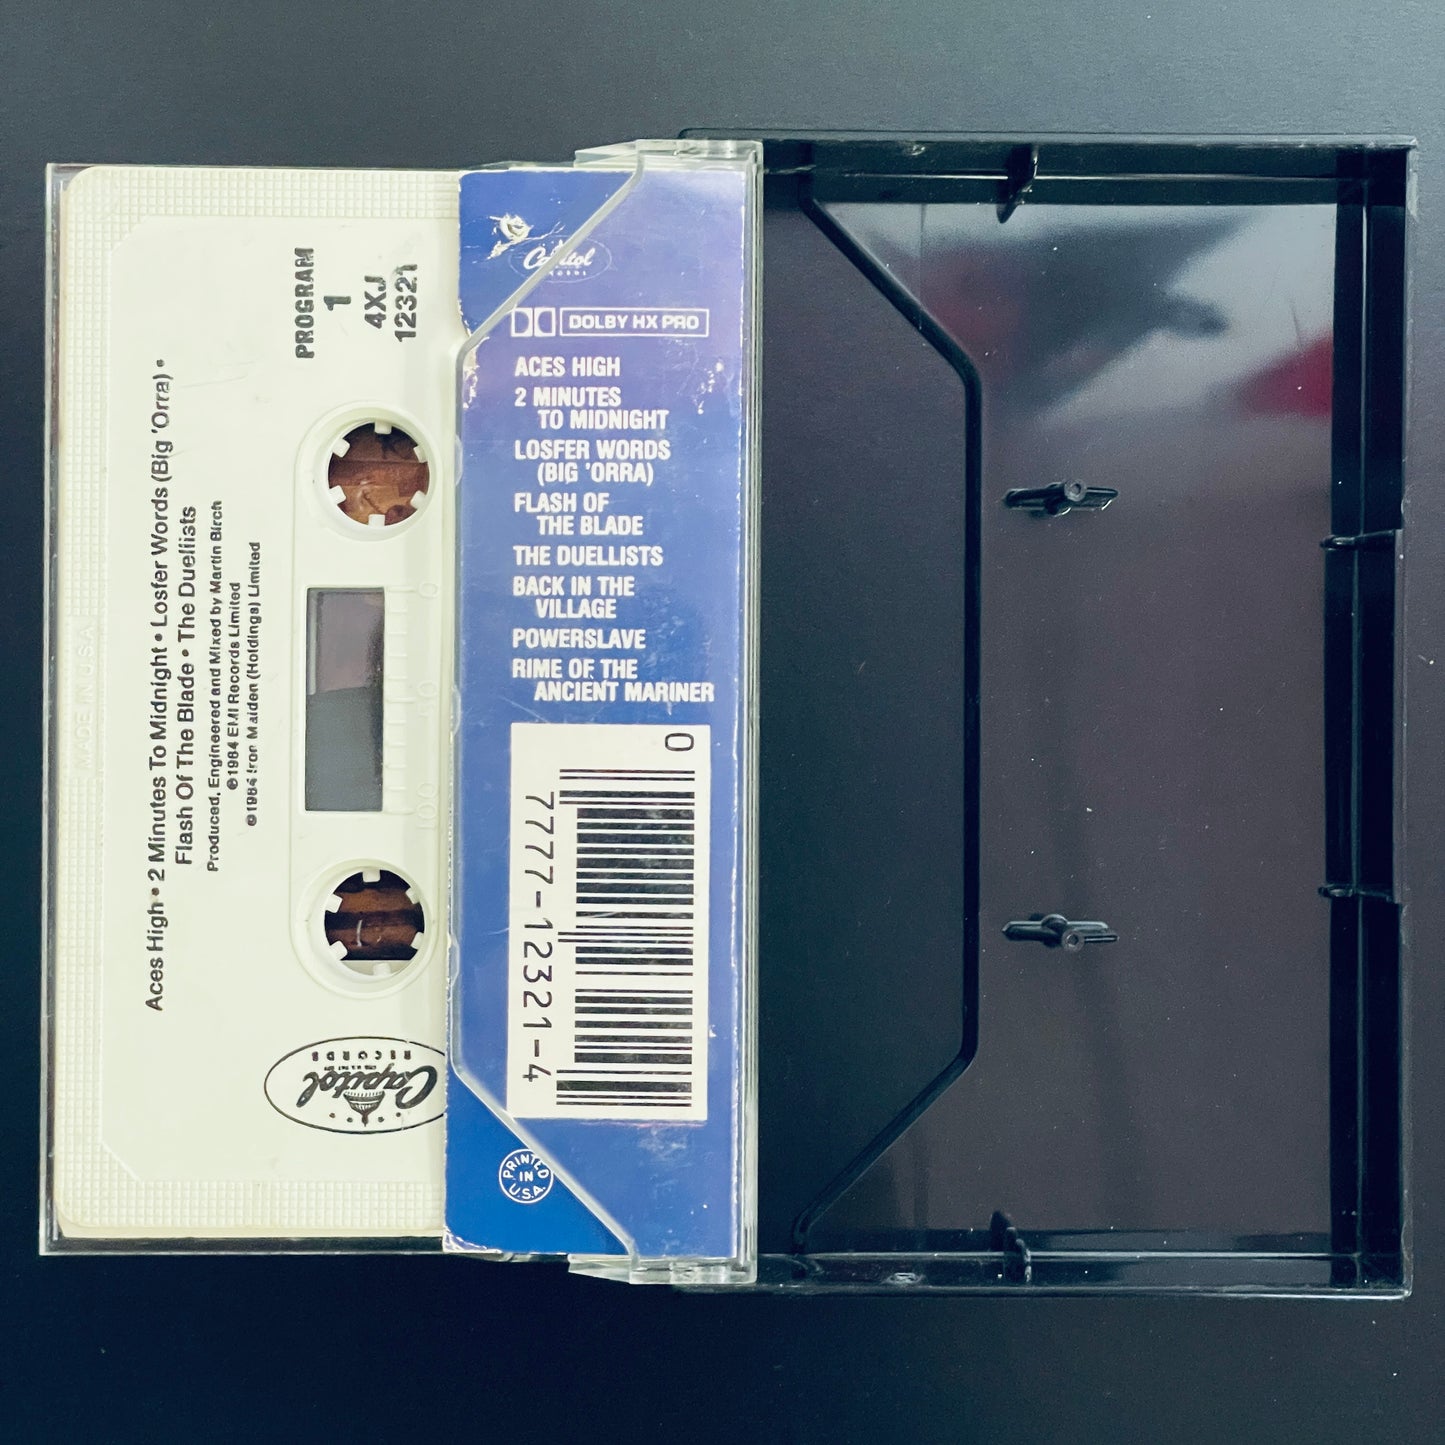 Iron Maiden - Powerslave original cassette tape (used)